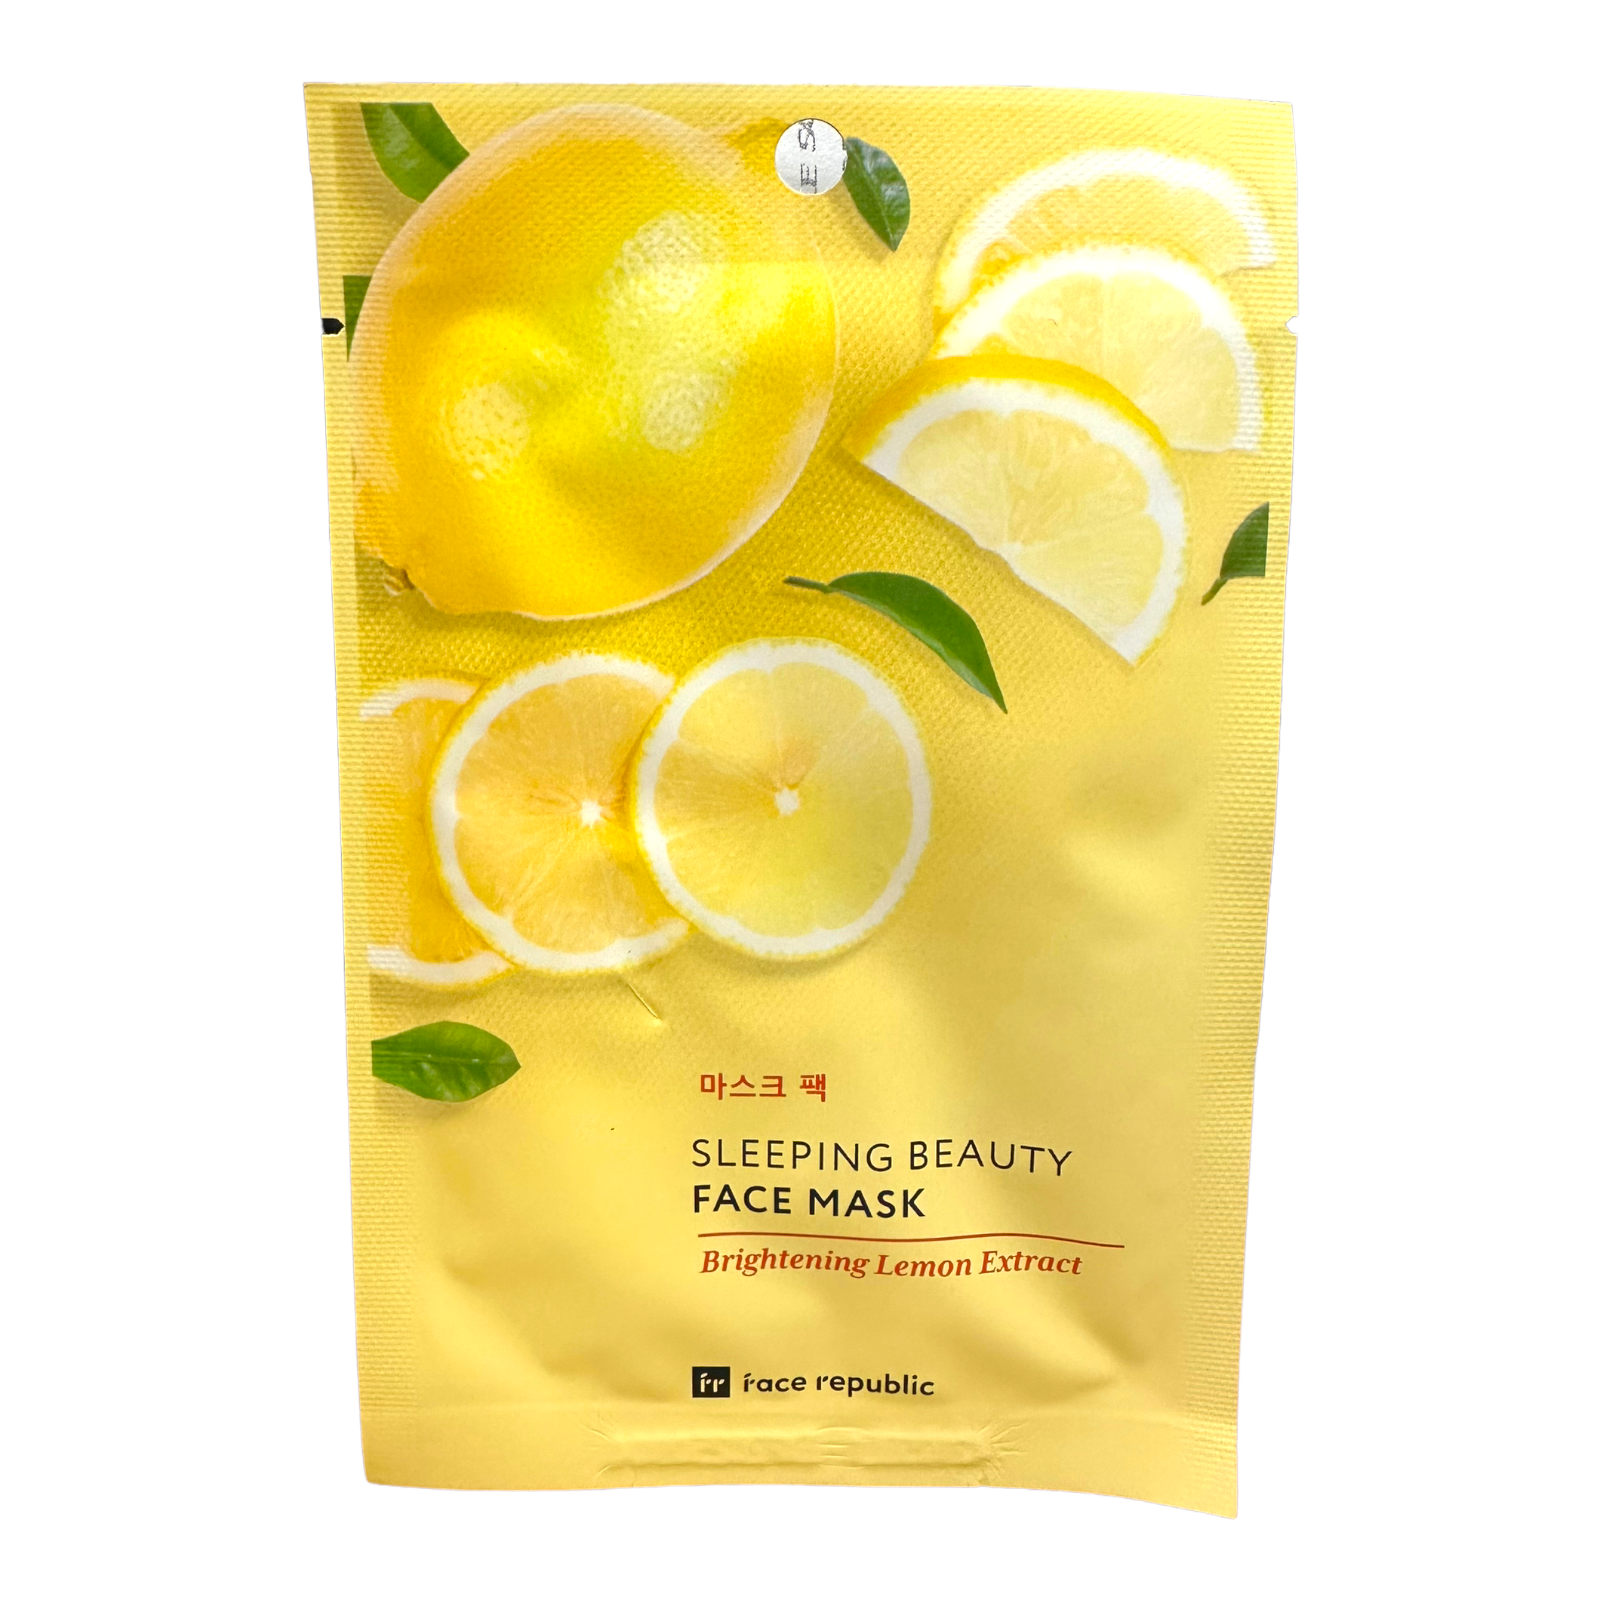 Face Republic - Sleeping Beauty Face Mask - Brightening Lemon Extract 23g